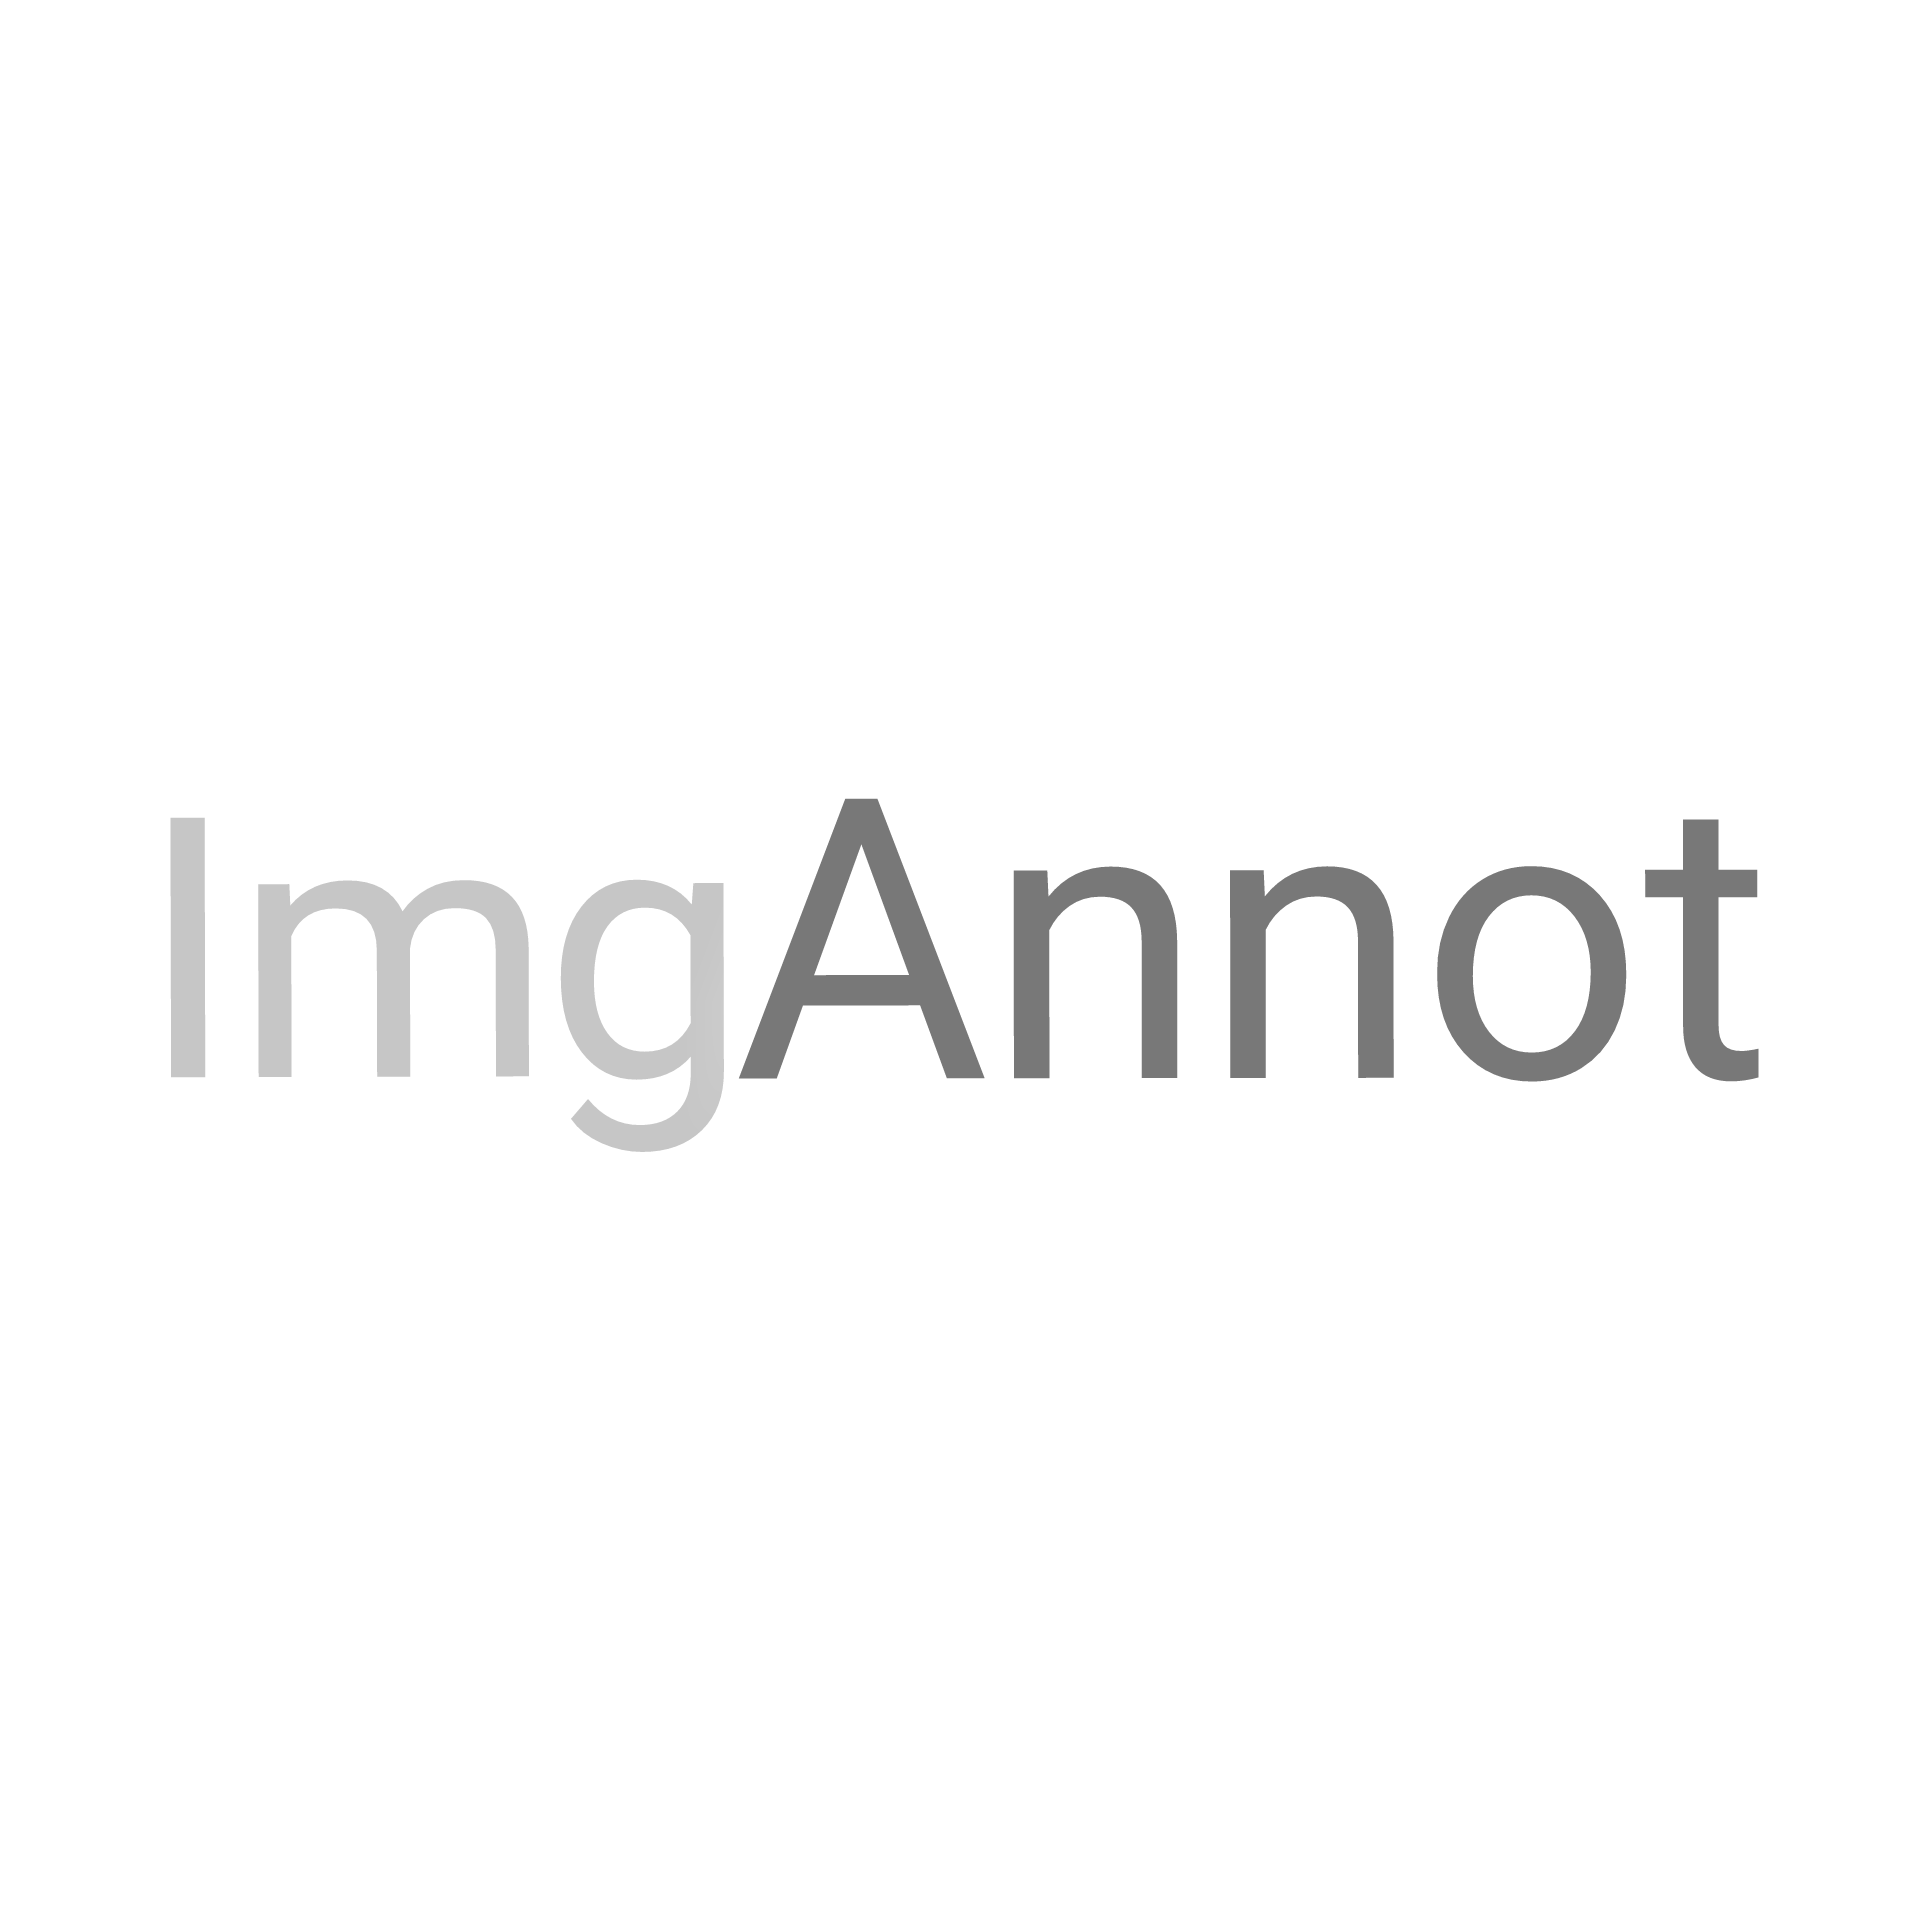 org.pilad.imgannotv1 logo